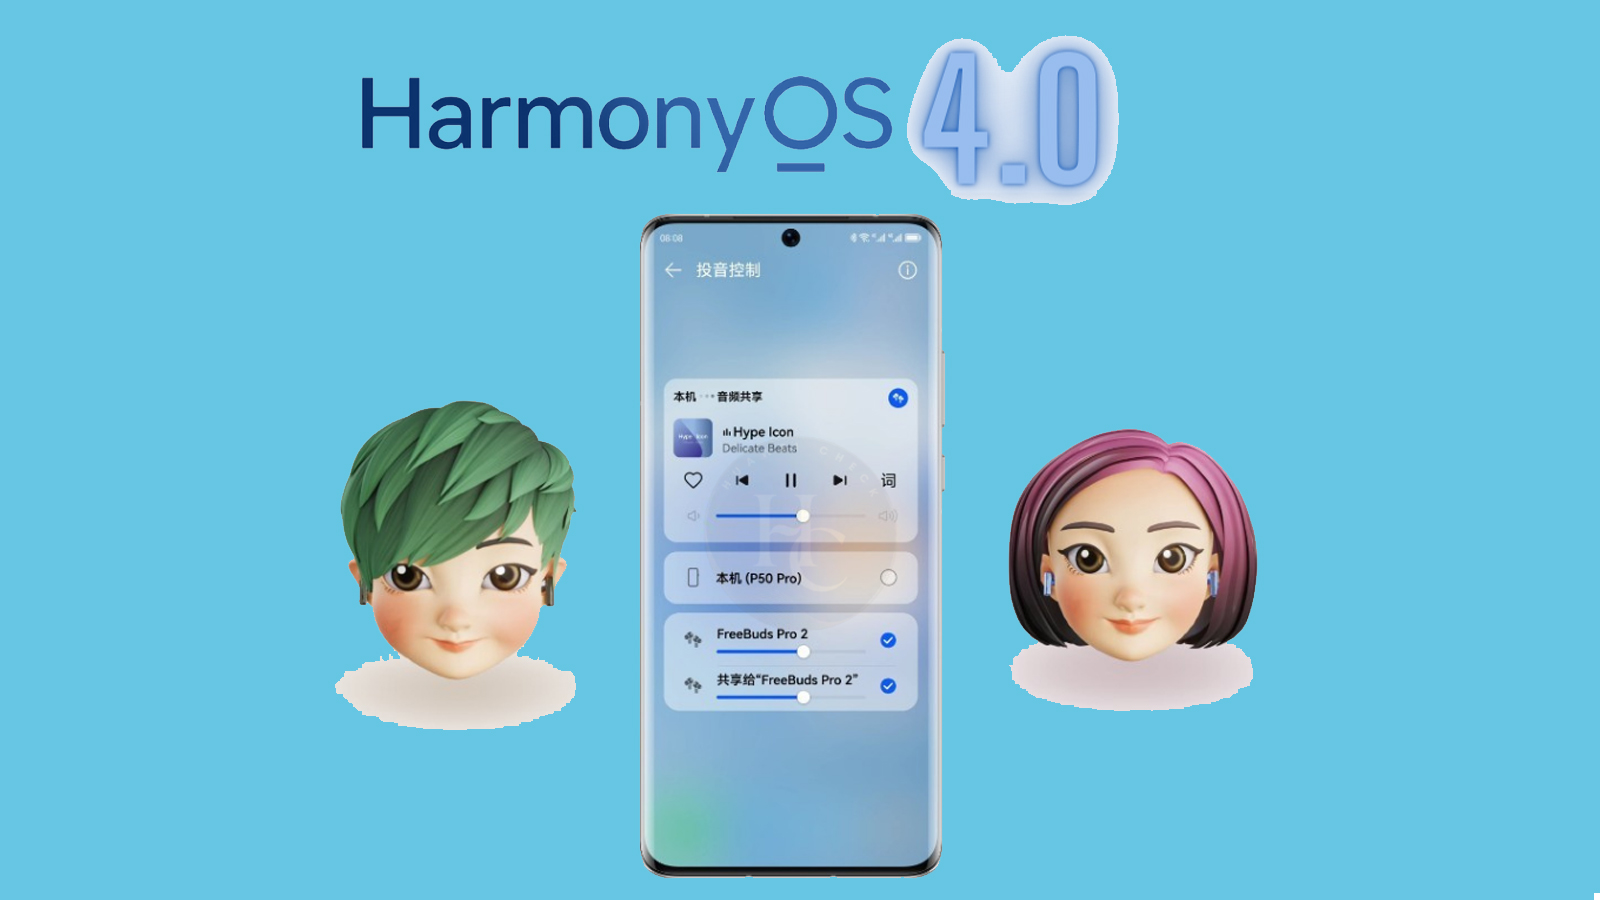 HarmonyOS 4